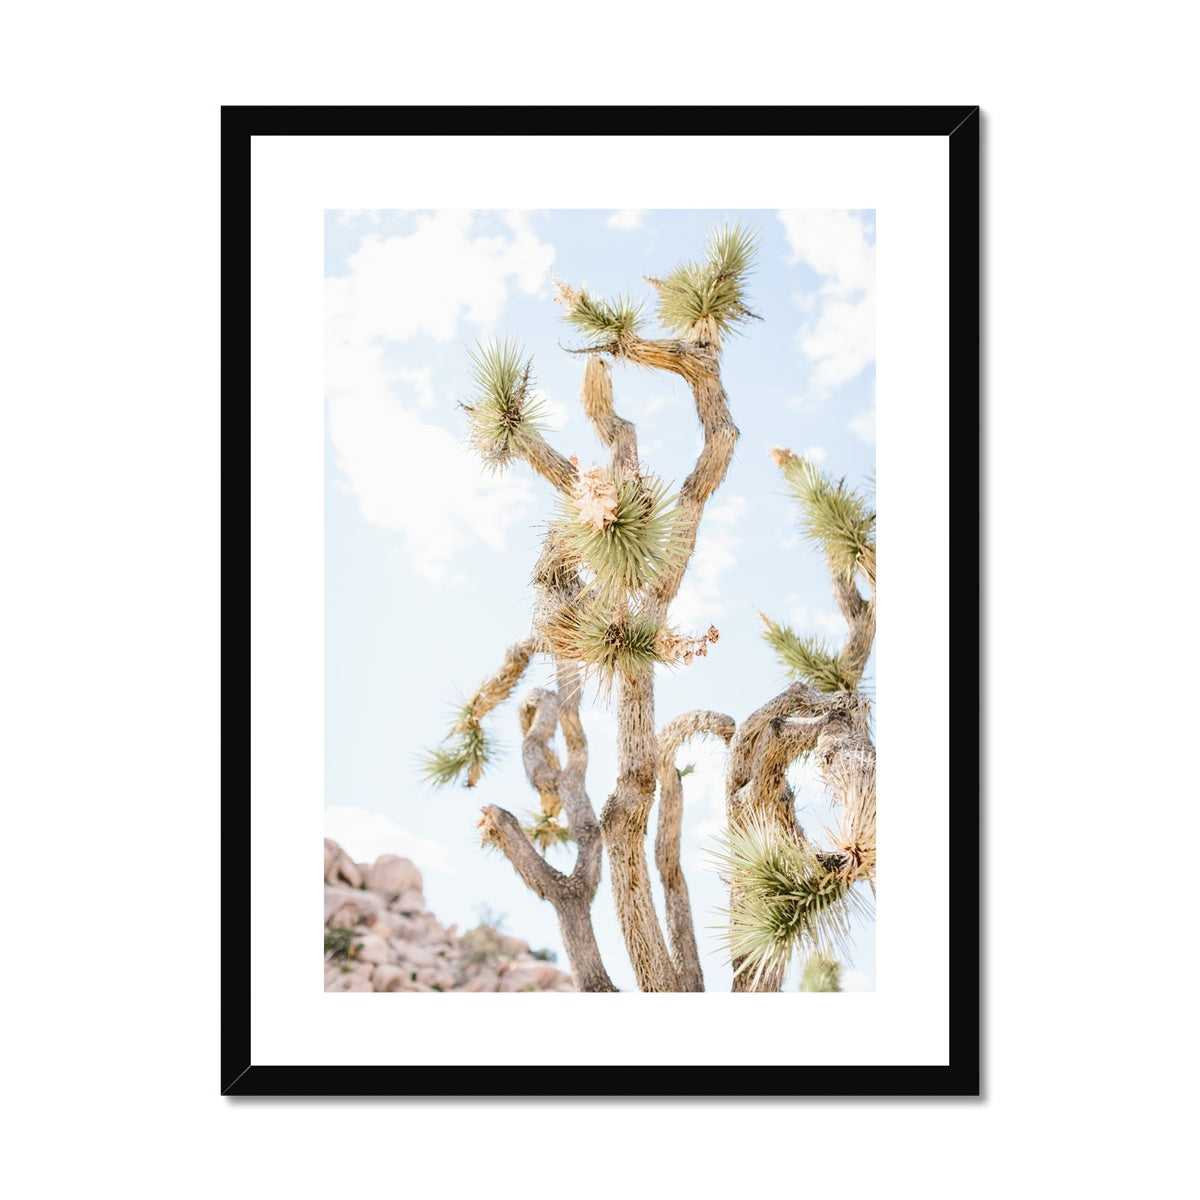 JOSHUA TREE UP CLOSE Framed & Mounted Print